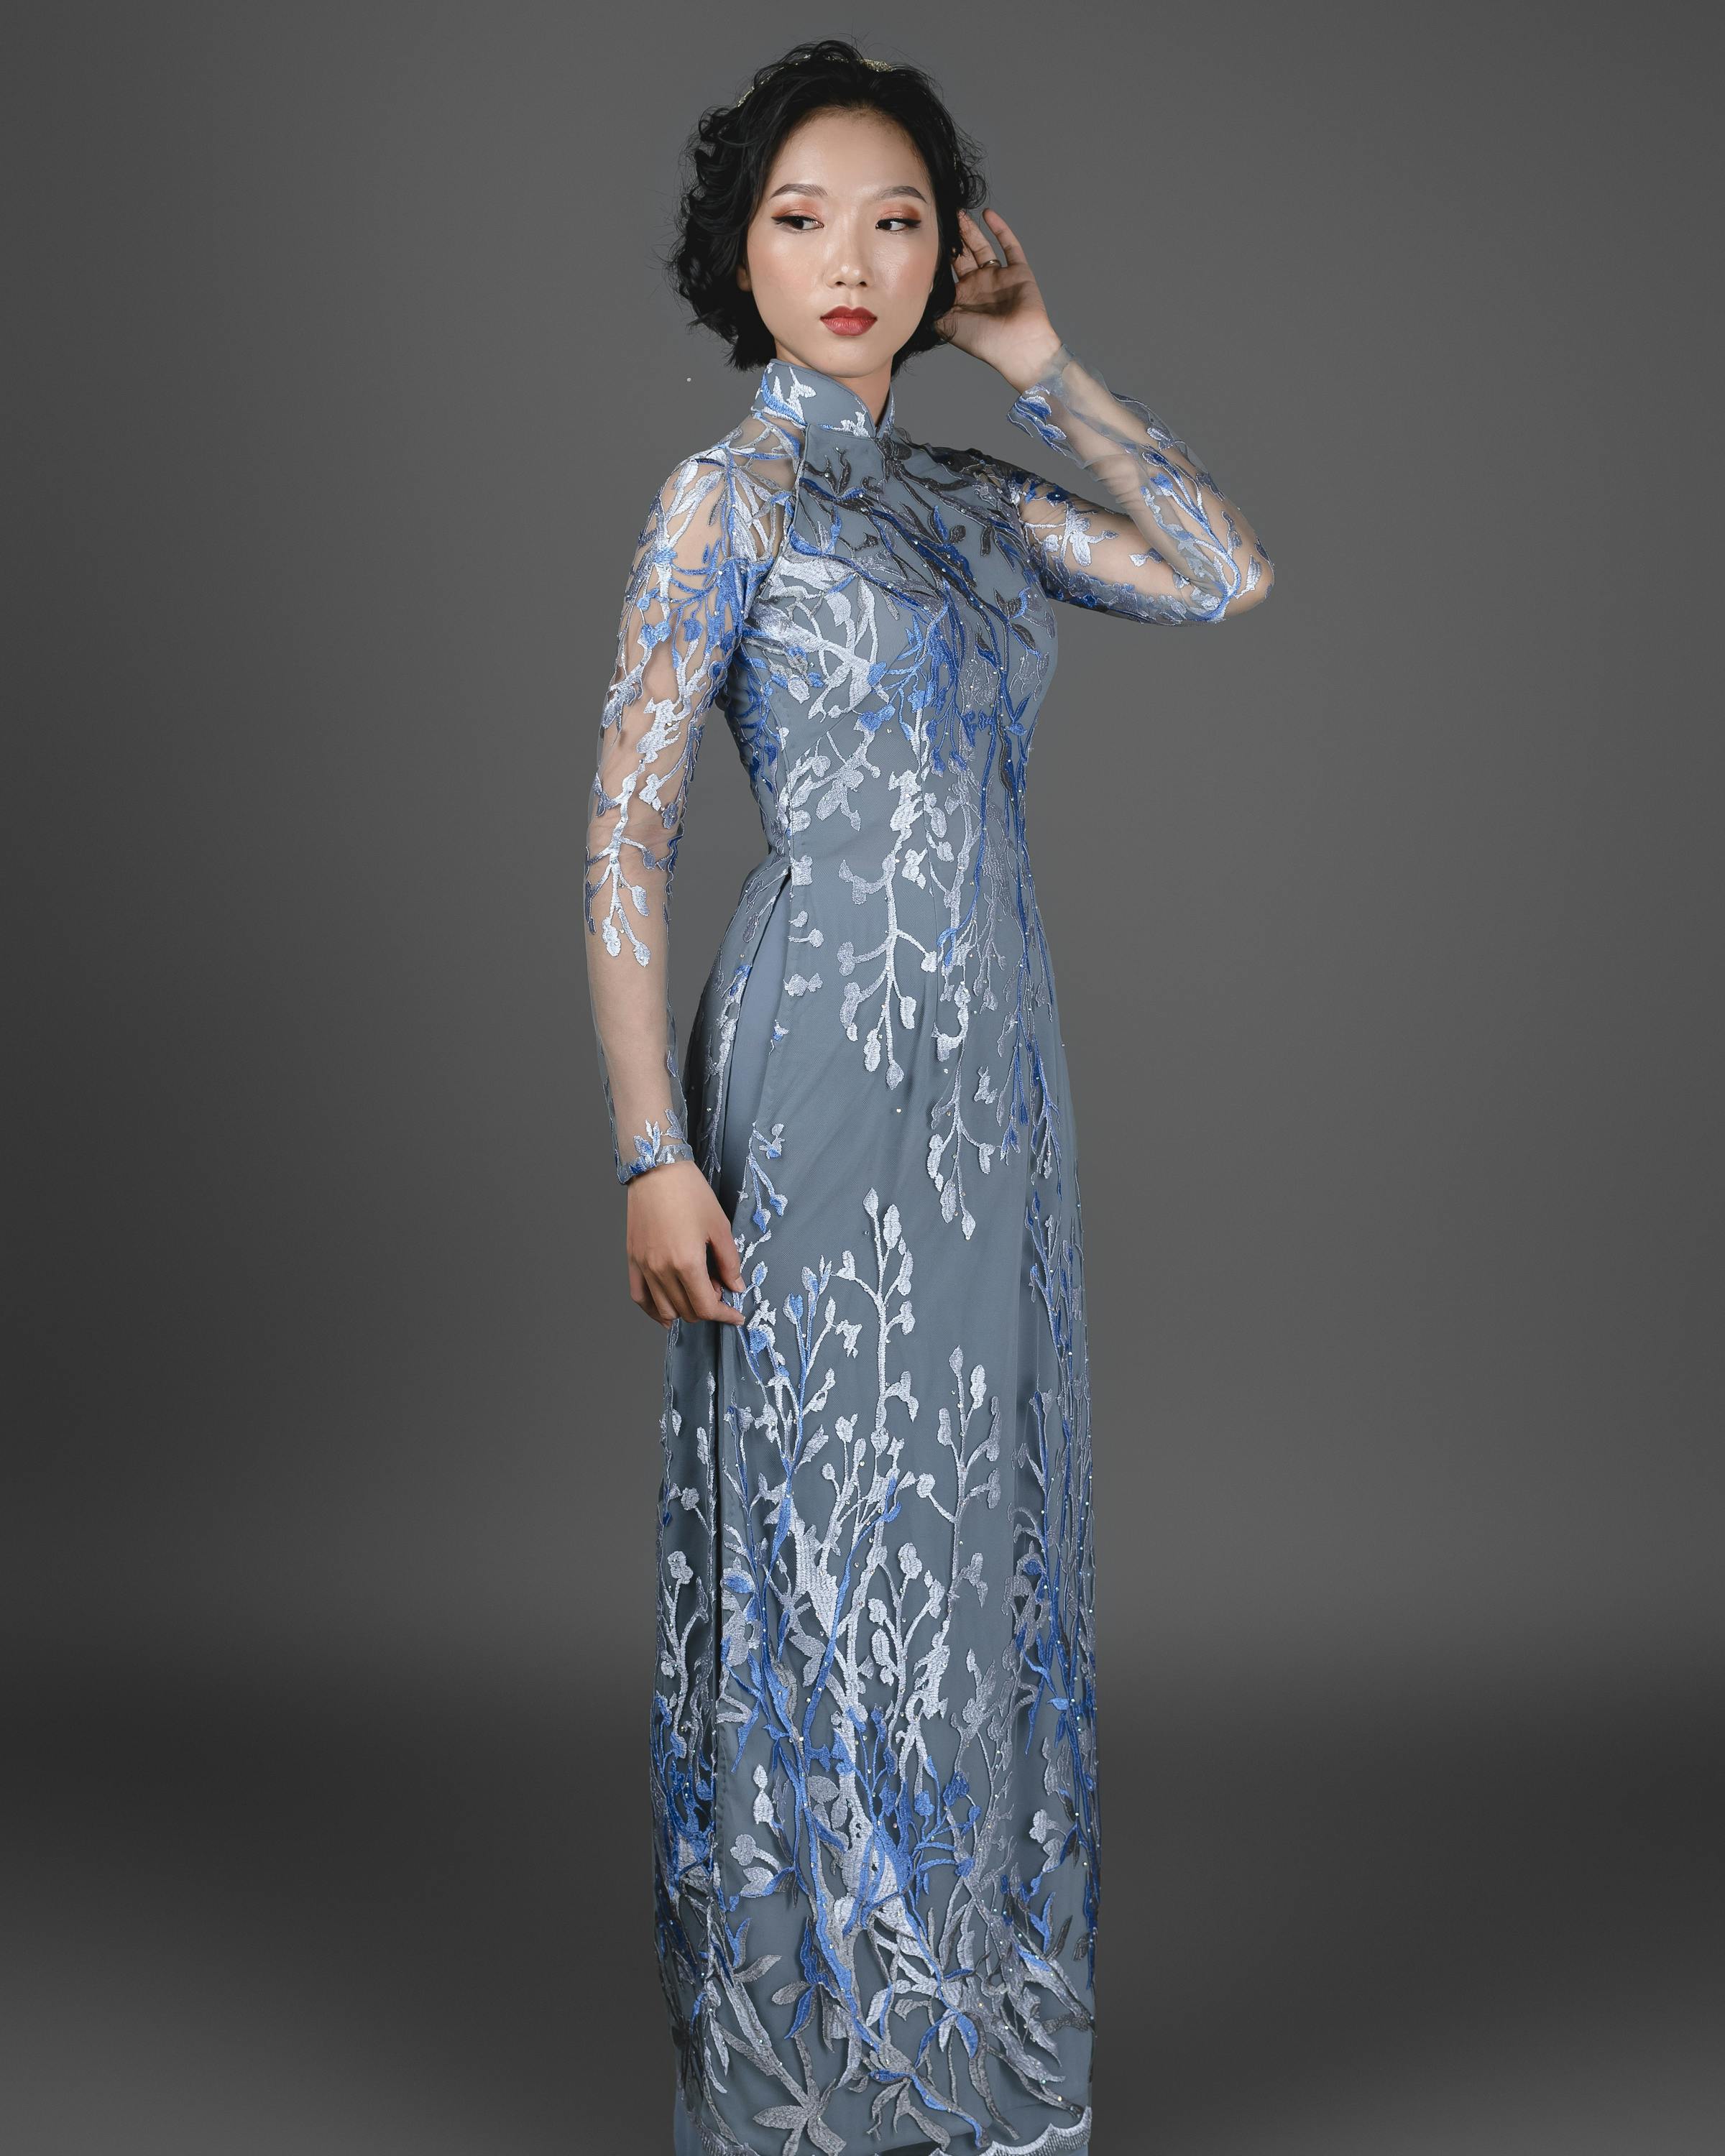 Ao dai Vietnam traditional dress. Blue silk long dress with